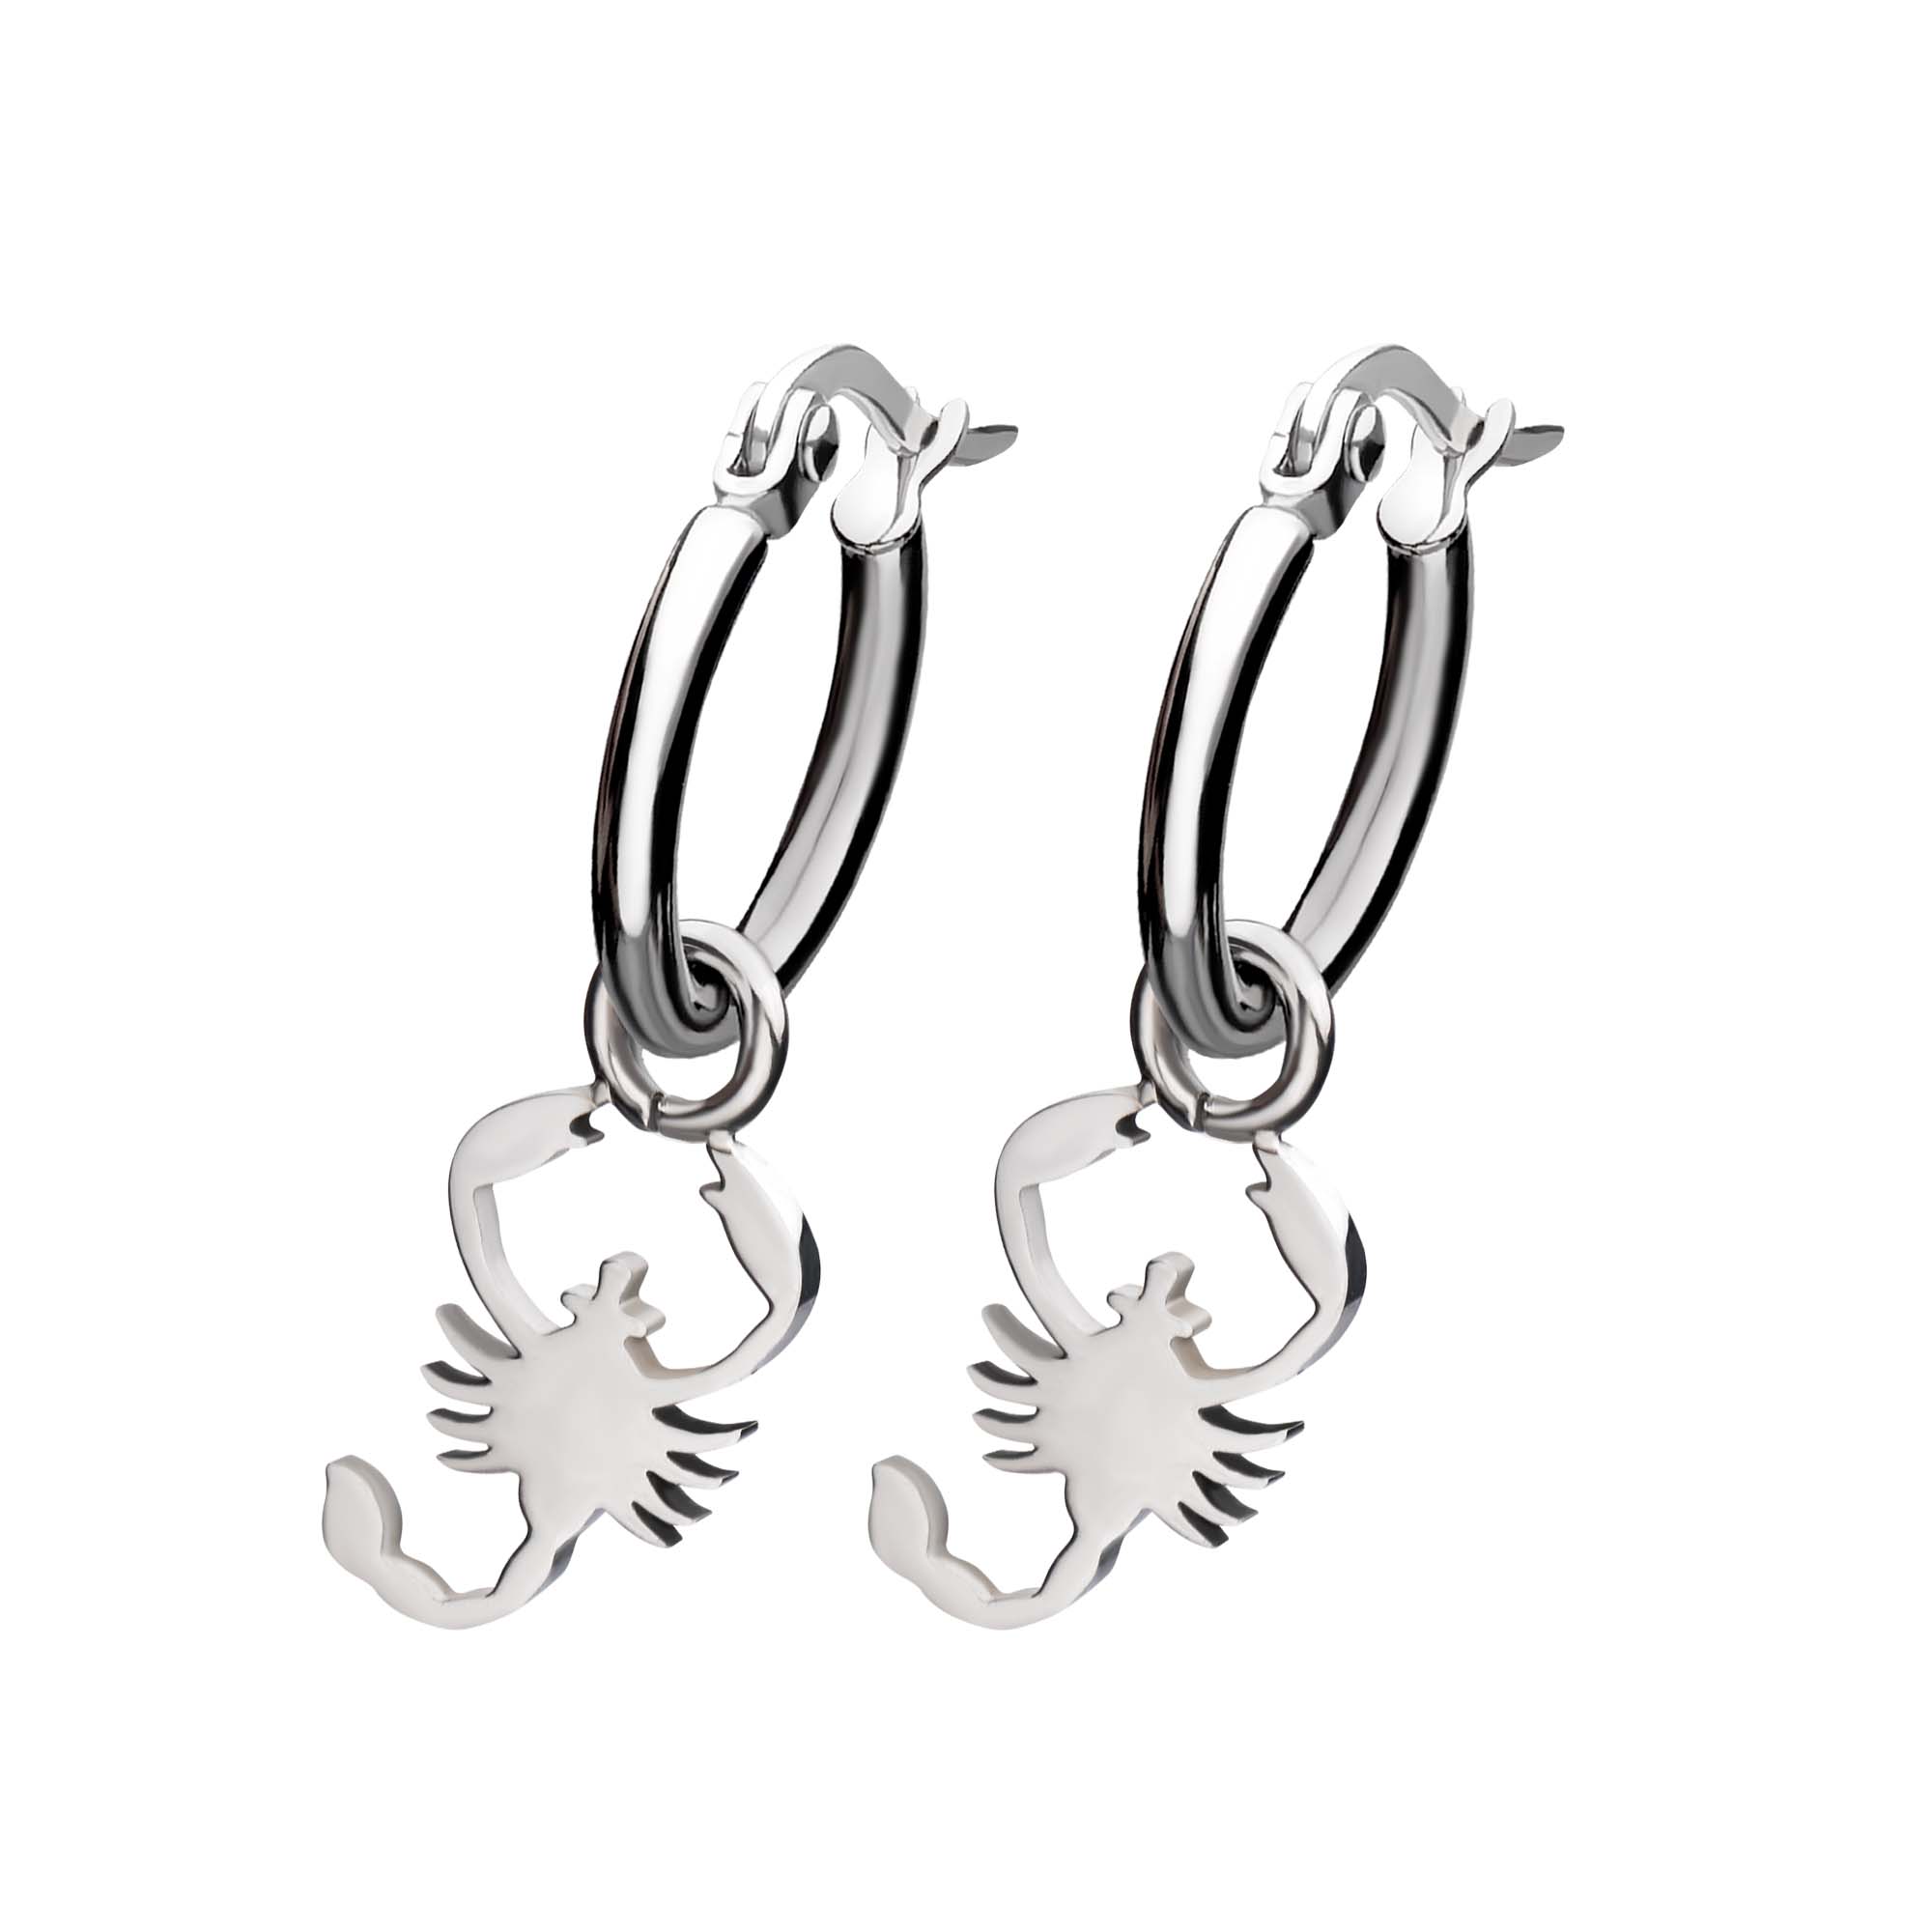 Stainless Steel Hoop Earrings with Scorpio Charm Image 2 Morin Jewelers Southbridge, MA